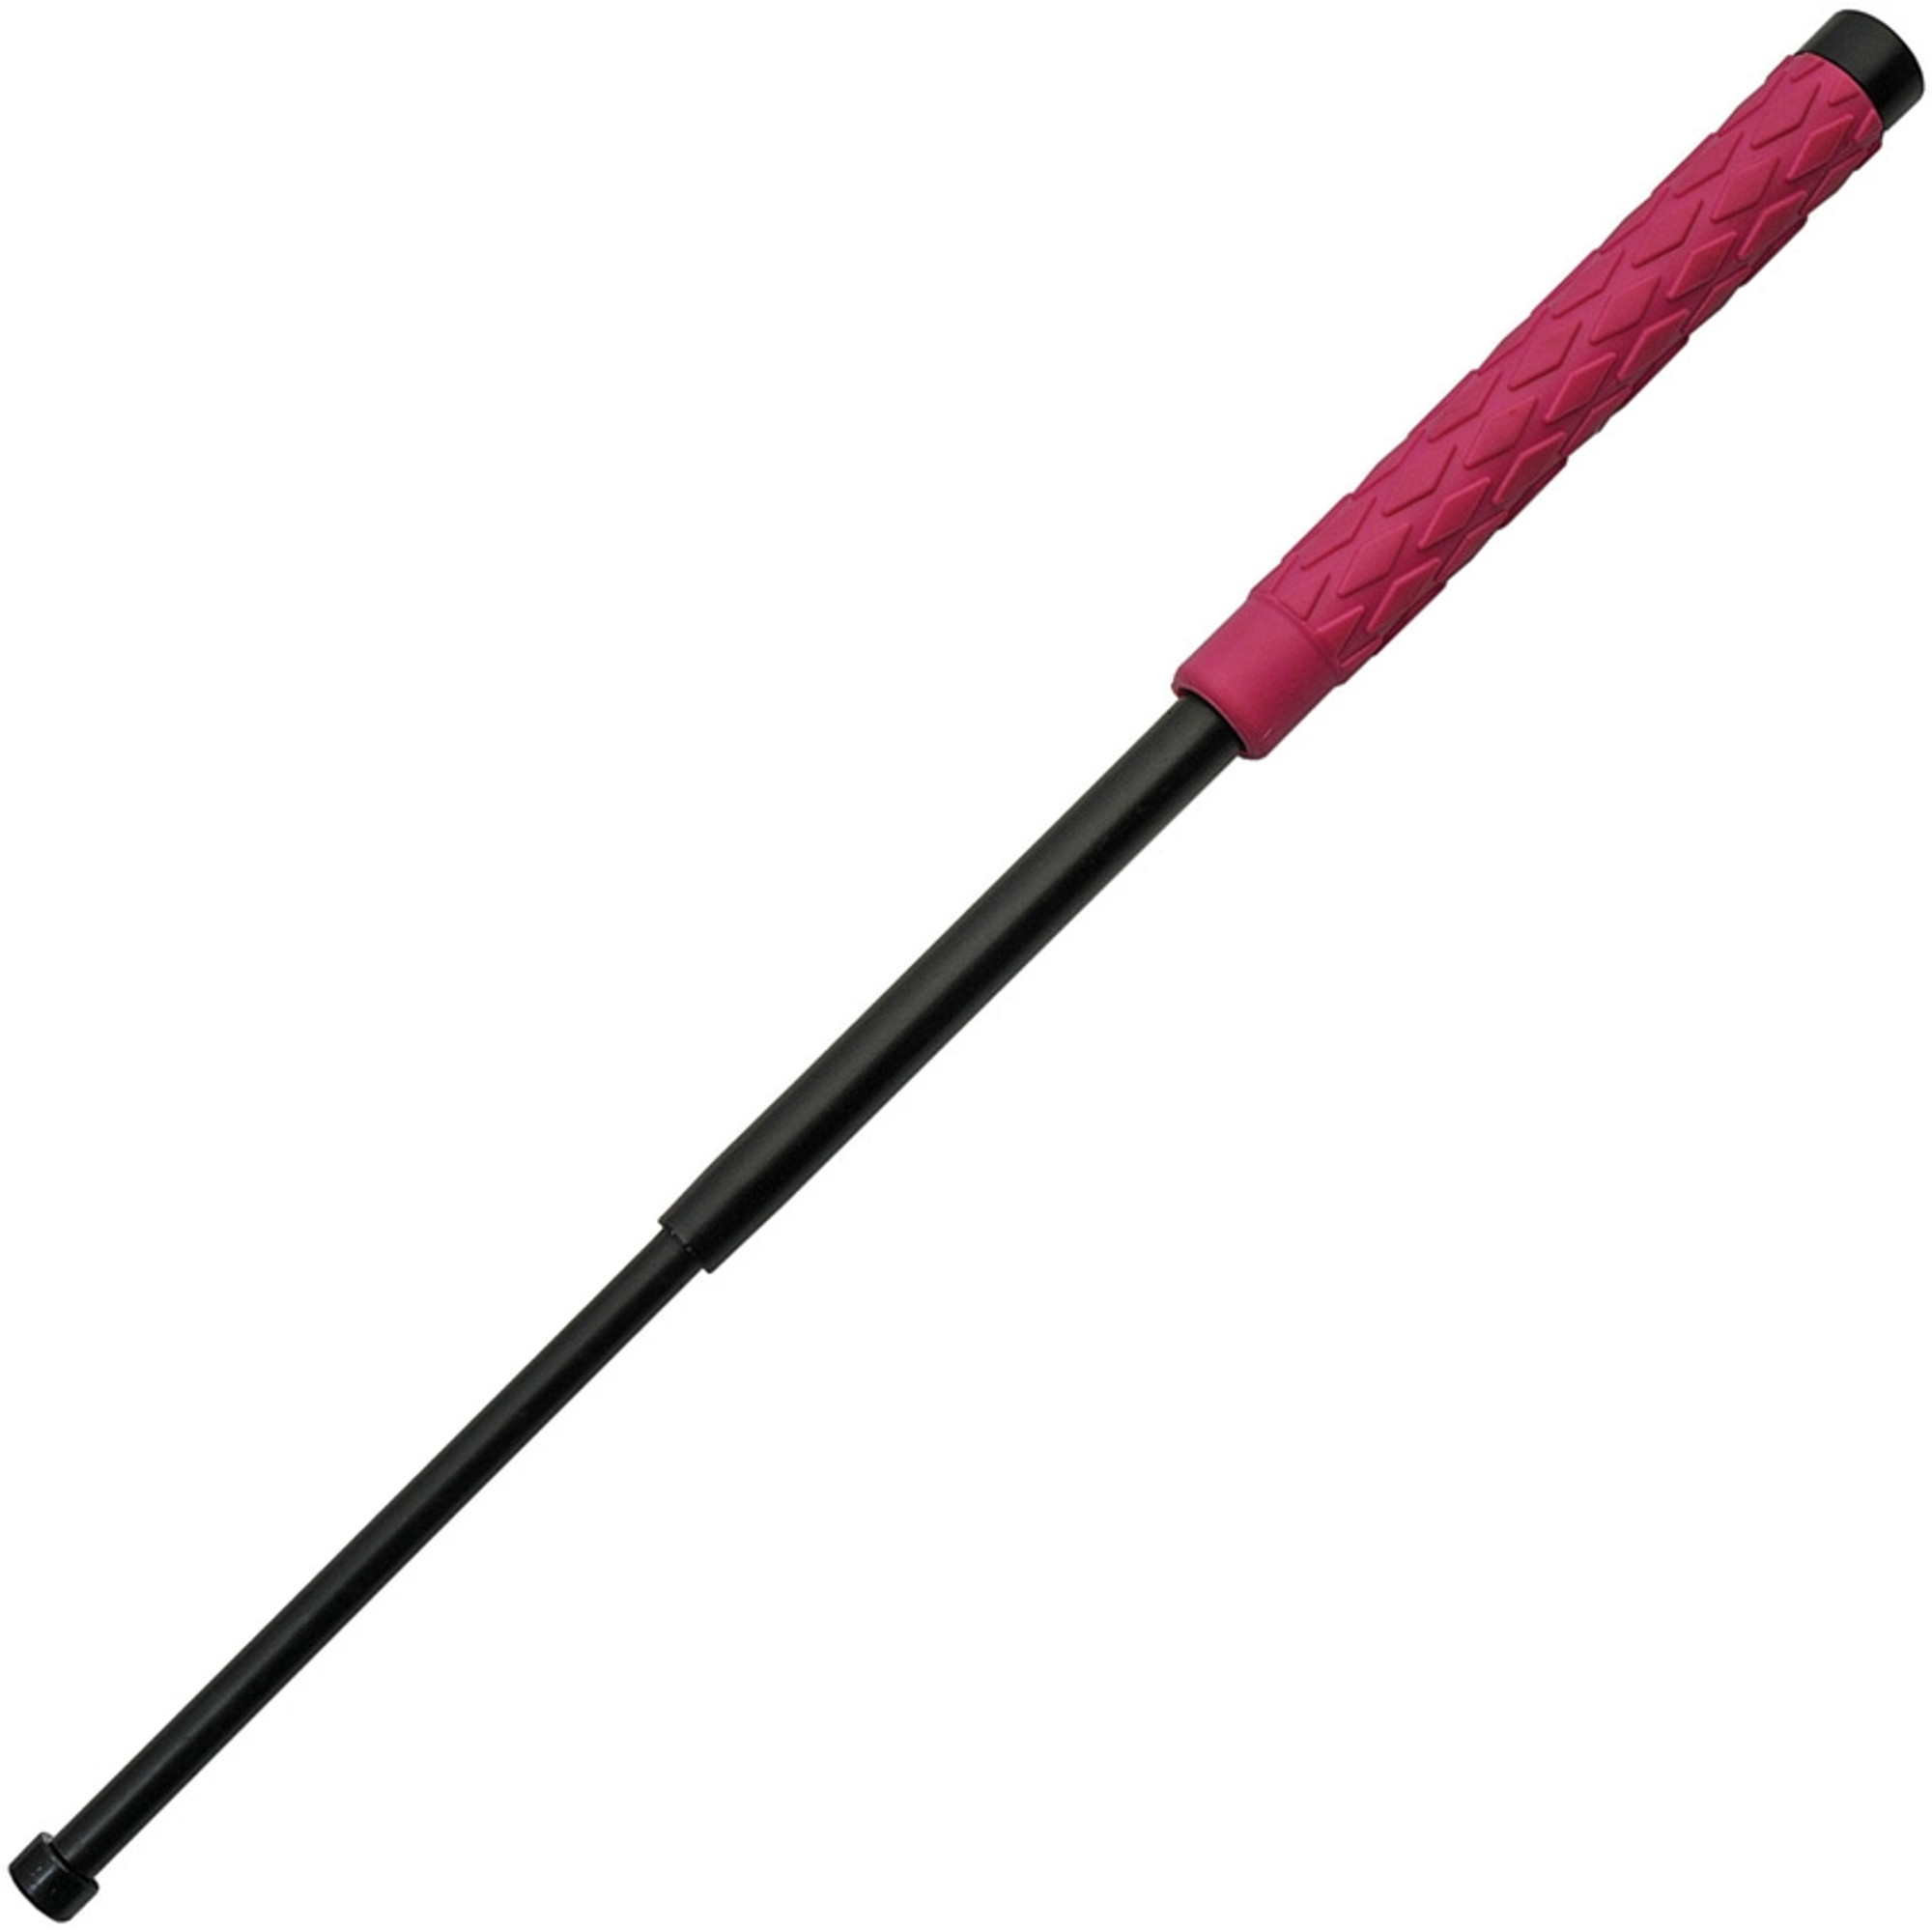 Kwik Force Collapsible Baton Pink/Blk 21